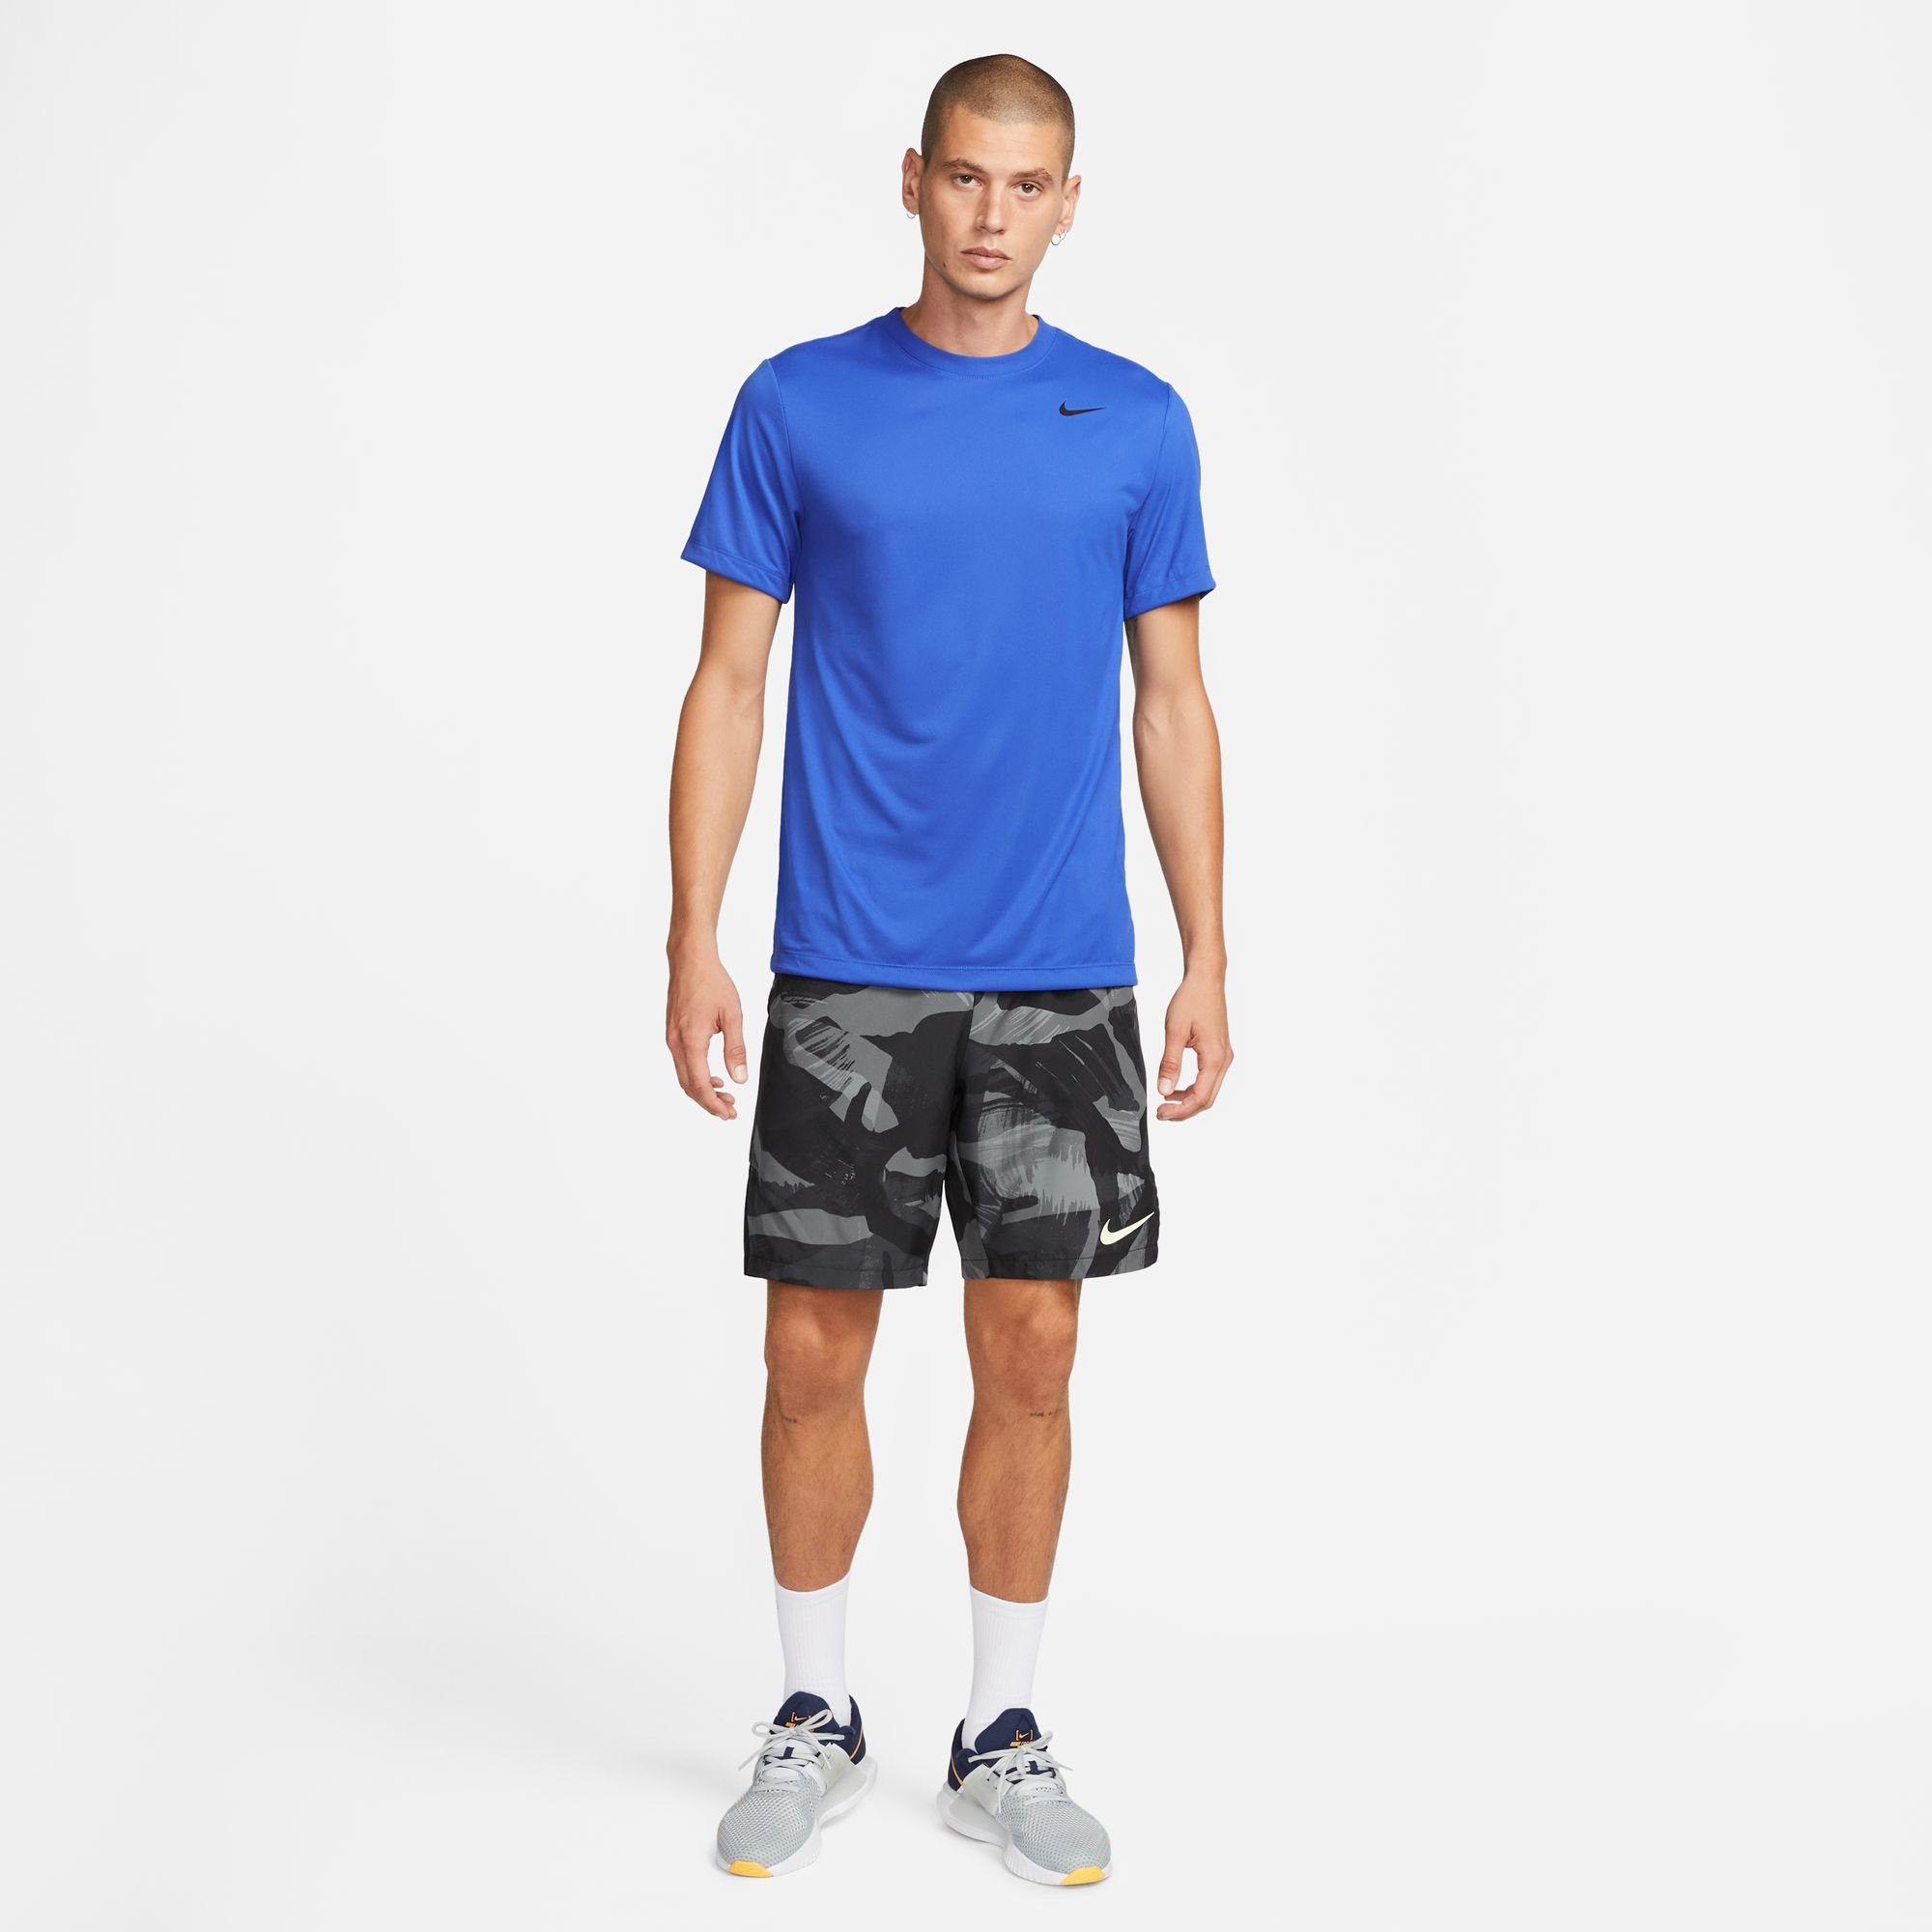 FITNESS MEN'S T-SHIRT LEGEND DRI-FIT blau Nike Trainingsshirt